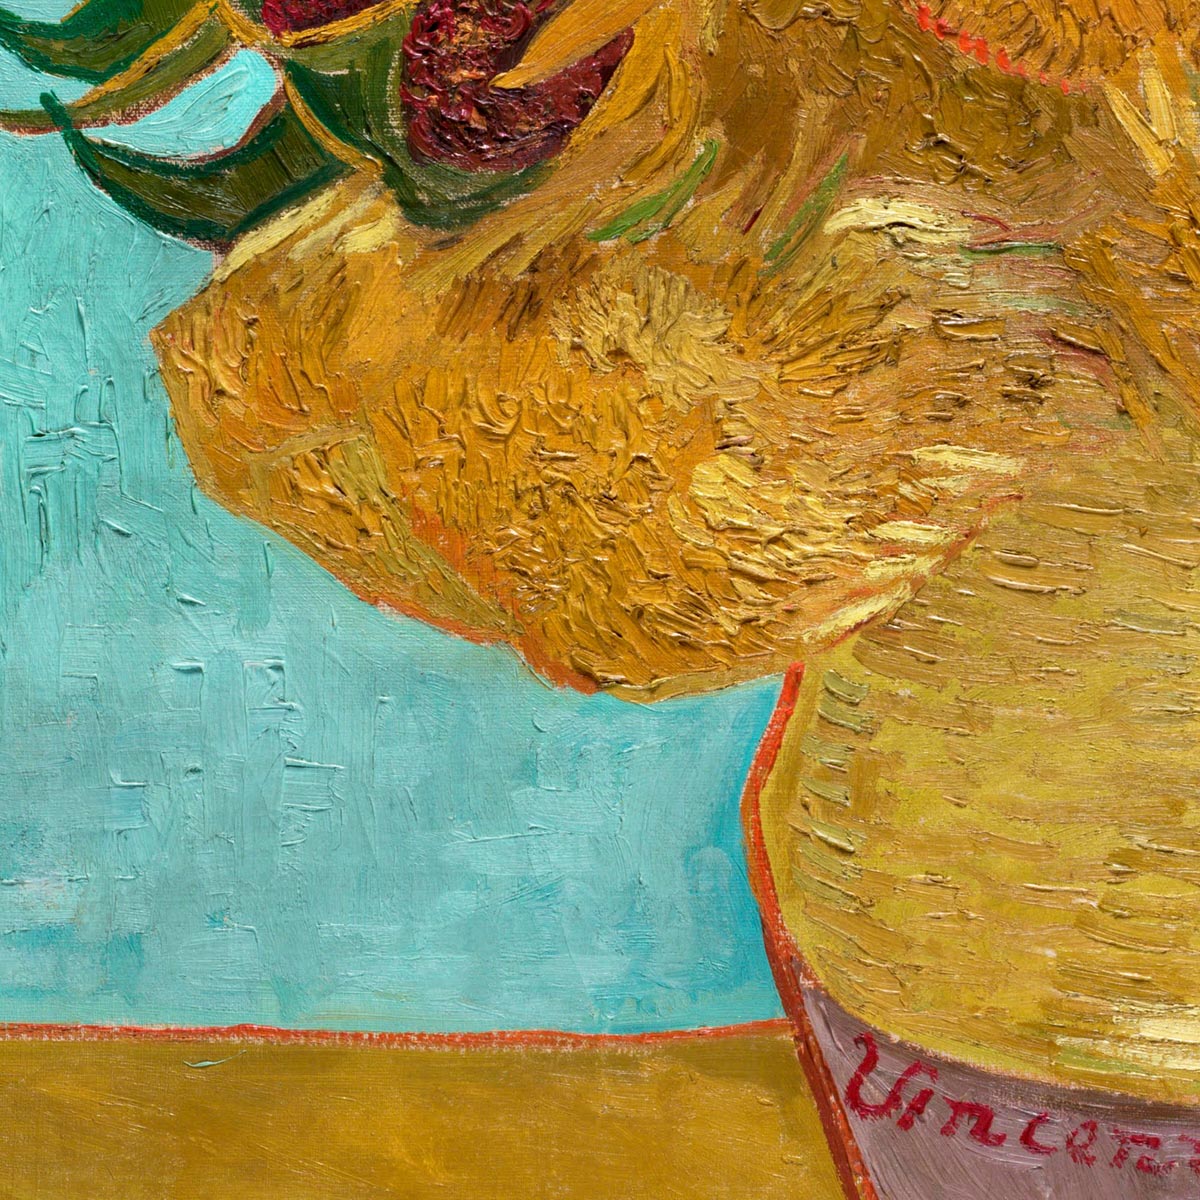 Vase with Twelve Sunflowers Art Print by Van Gogh